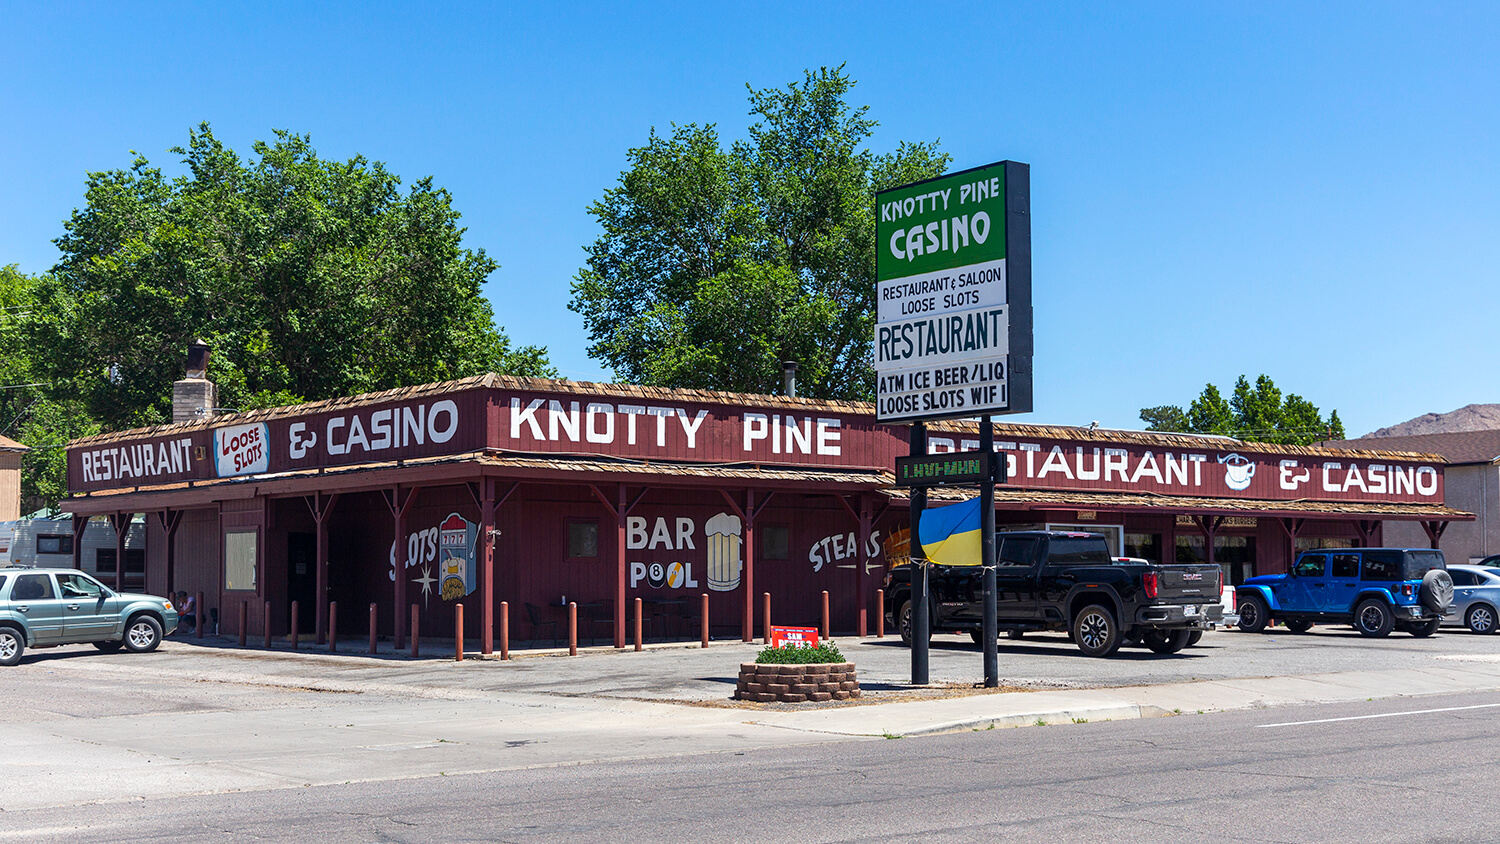 Knotty Pine Restaurant & Lounge